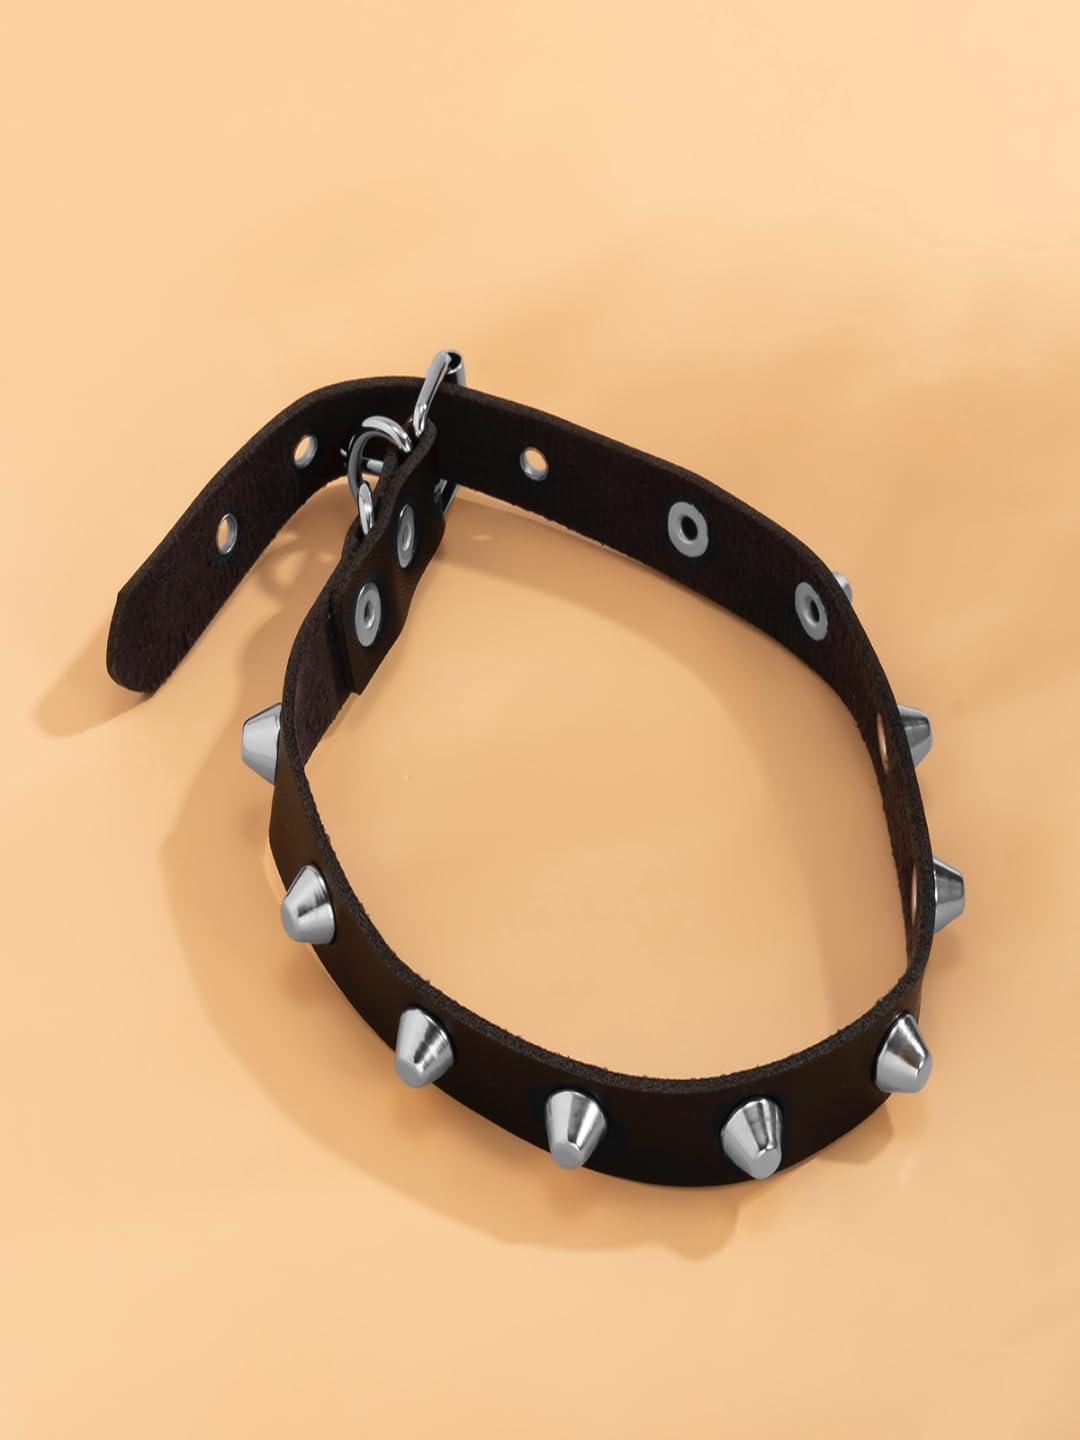 Faux Leather Spike Choker - Stylish | Black Faux Leather Metal Spike Choker Necklace